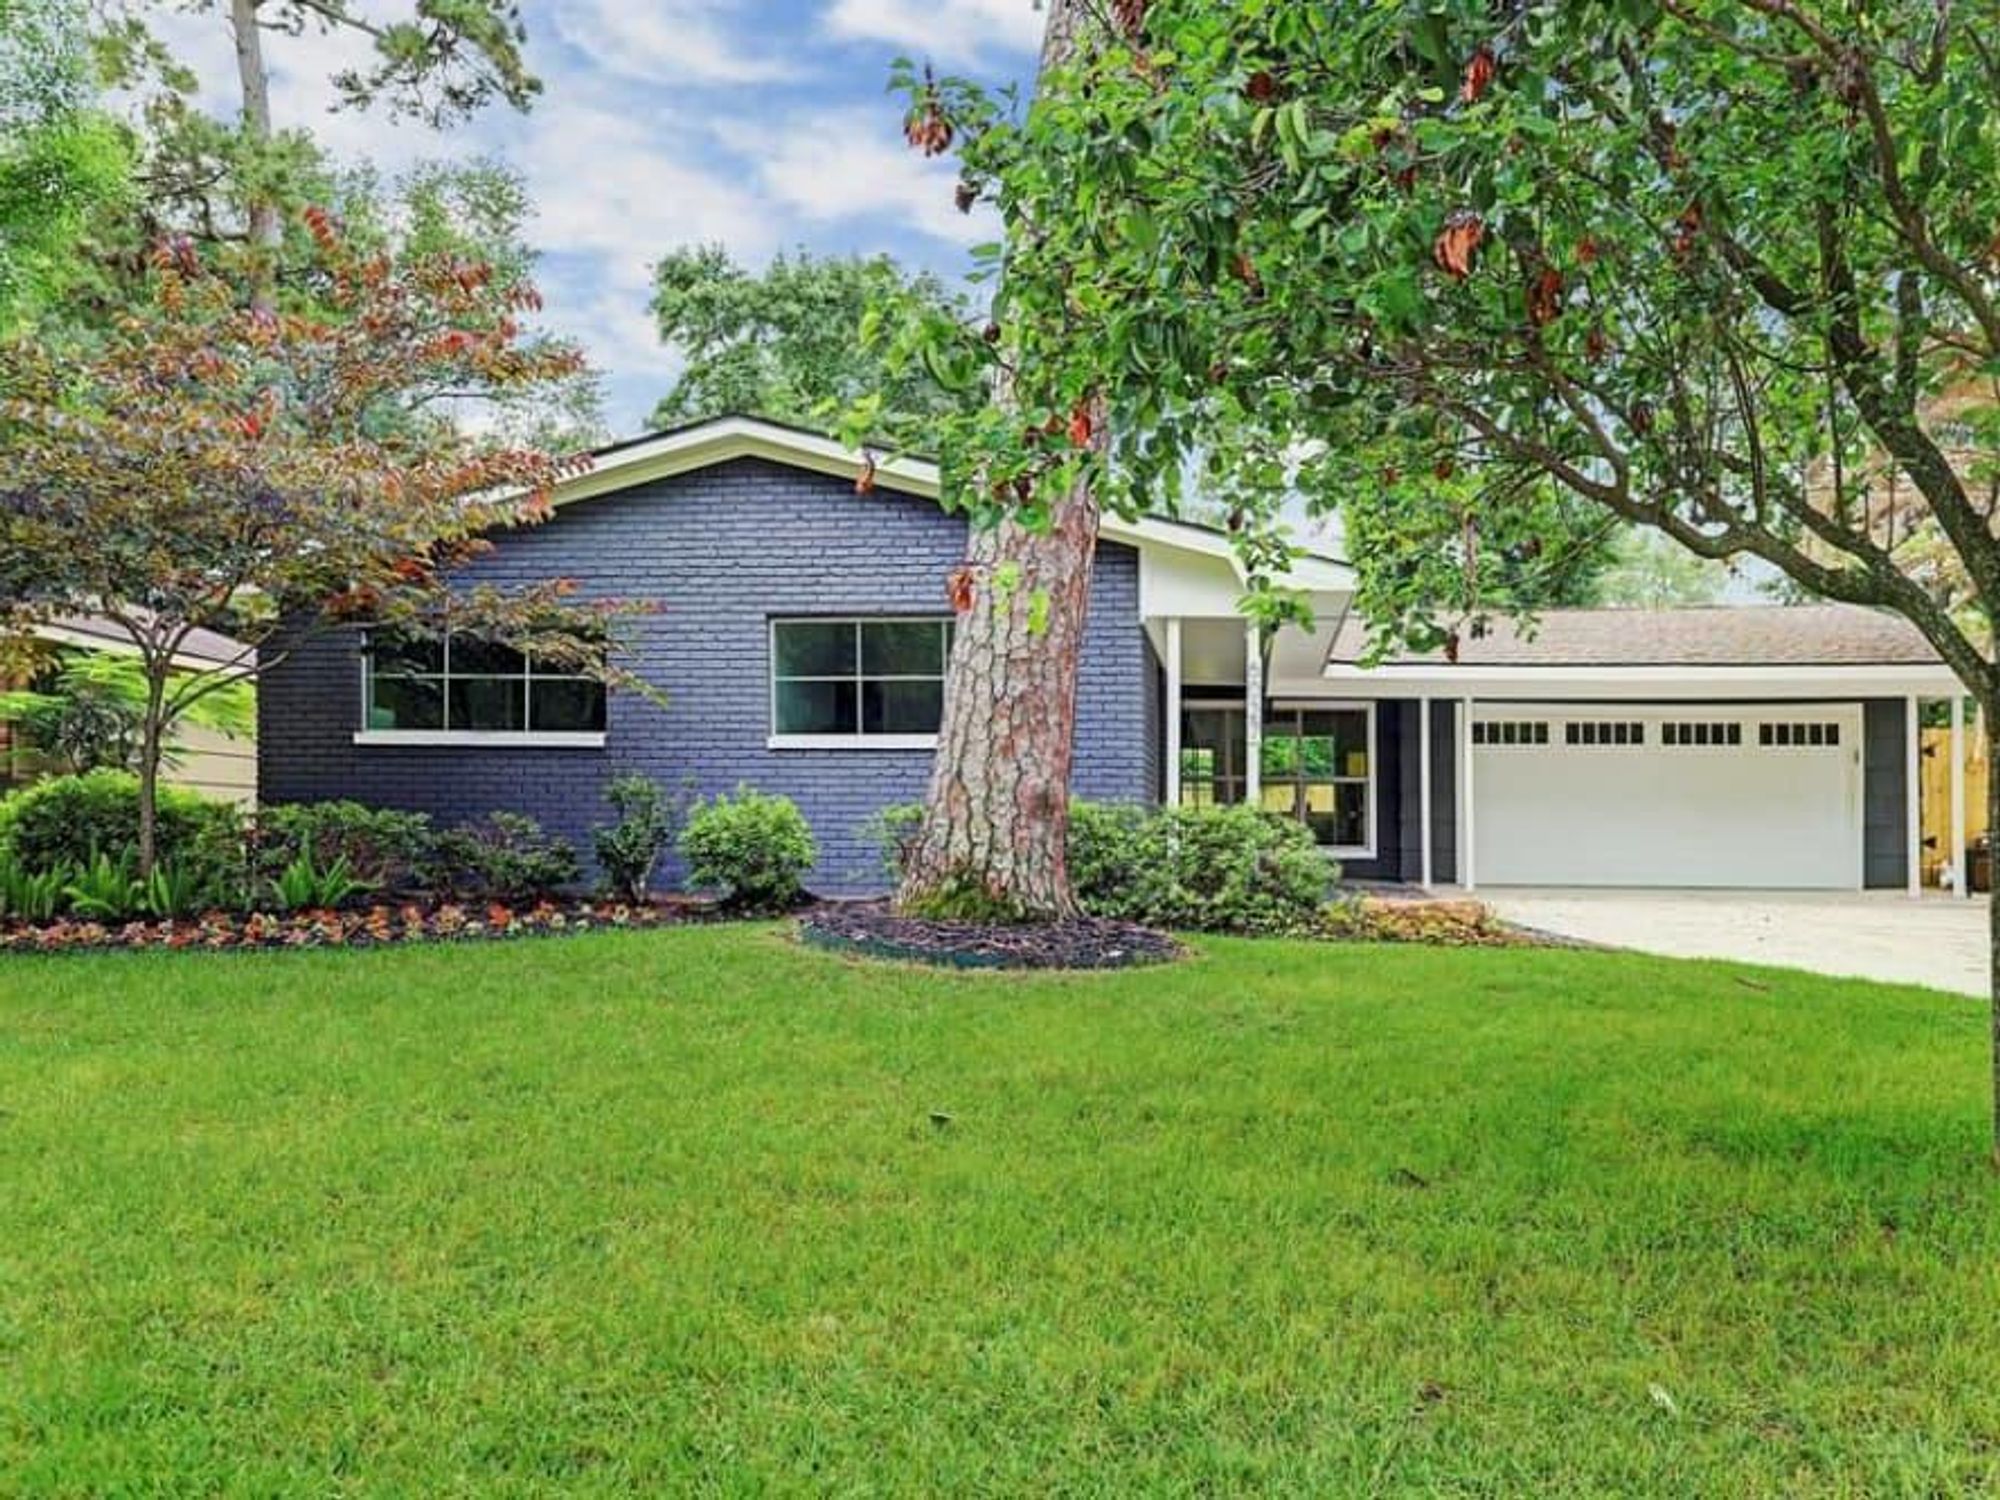 Home for sale in Houston's Lazybrook/Timbergrove neighborhood